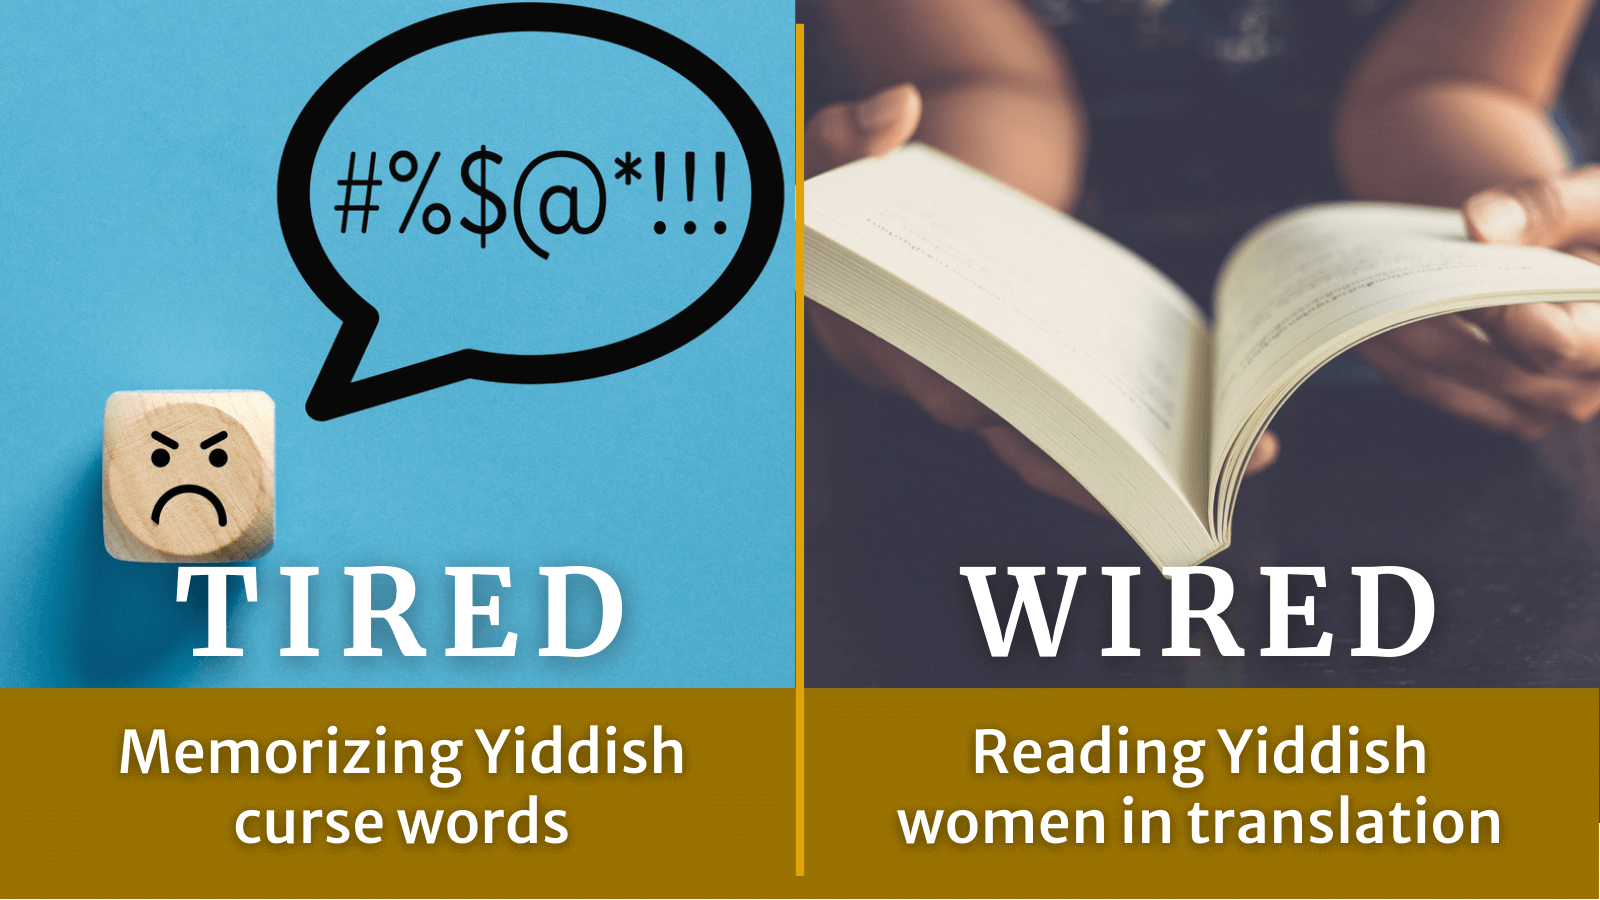 Tired: Memorizing Yiddish curse words. Wired: Reading Yiddish women in translation